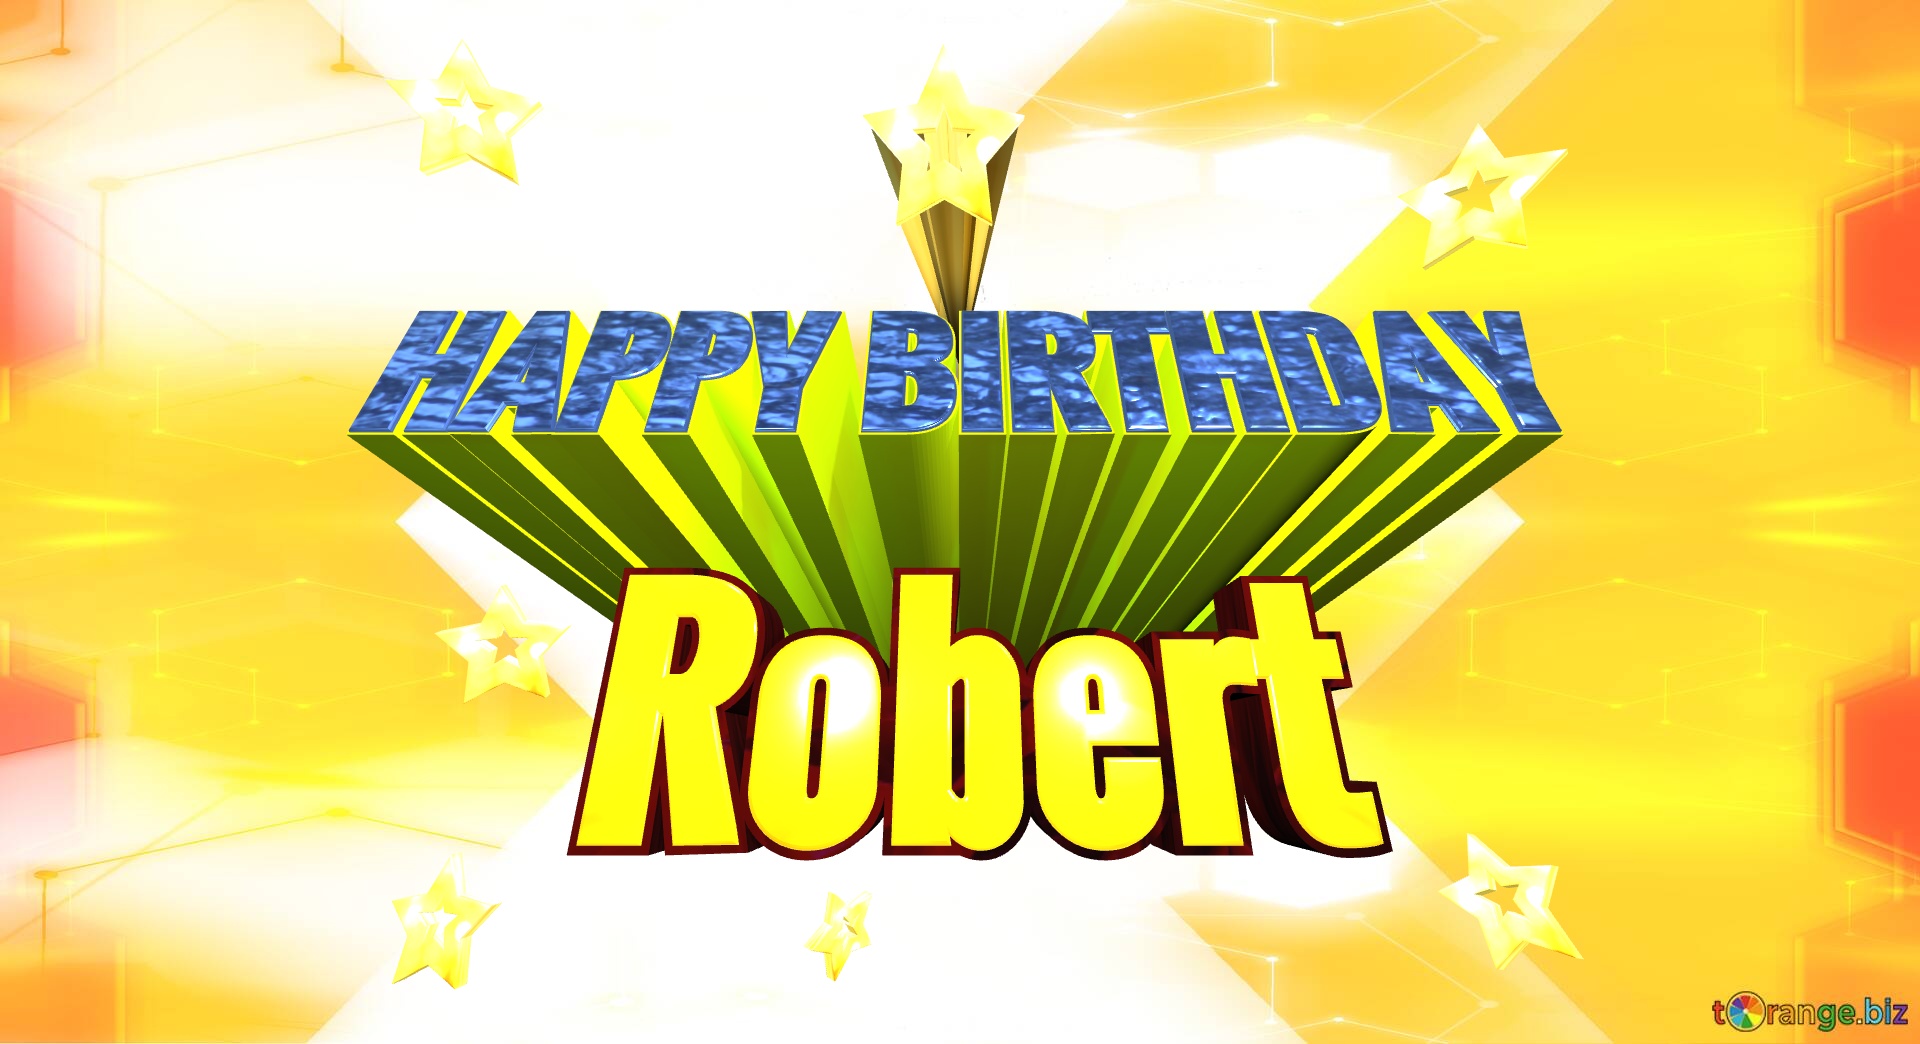 Robert HAPPY BIRTHDAY overlay yellow  transparent background №0